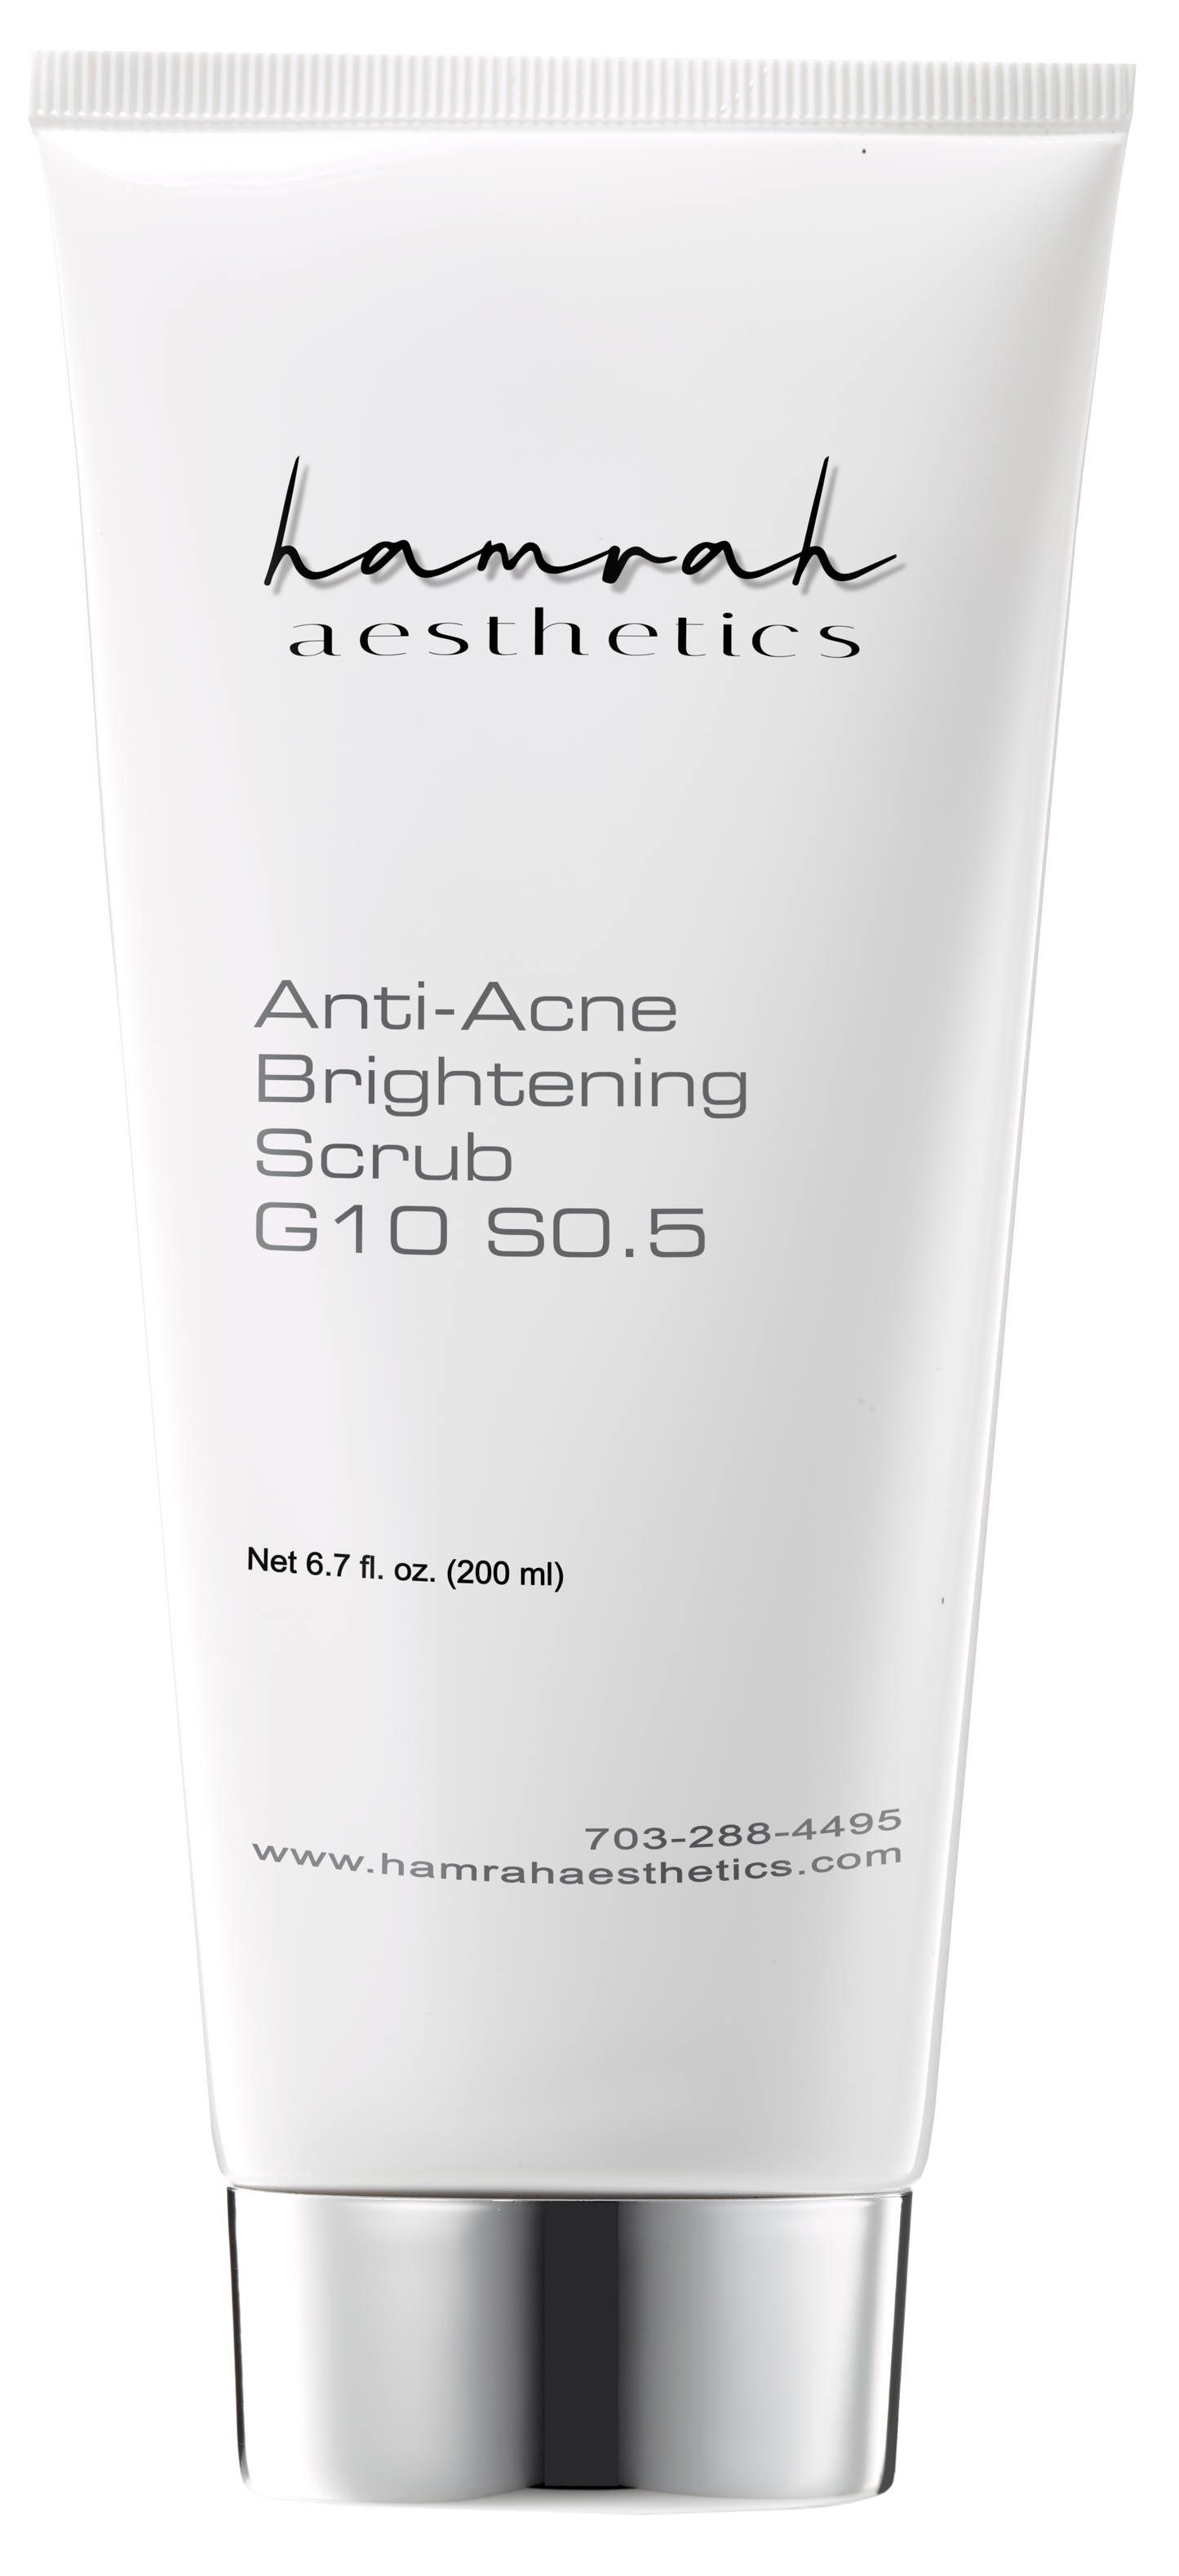 Anti-Acne Brightening Scrub G10 S0.5